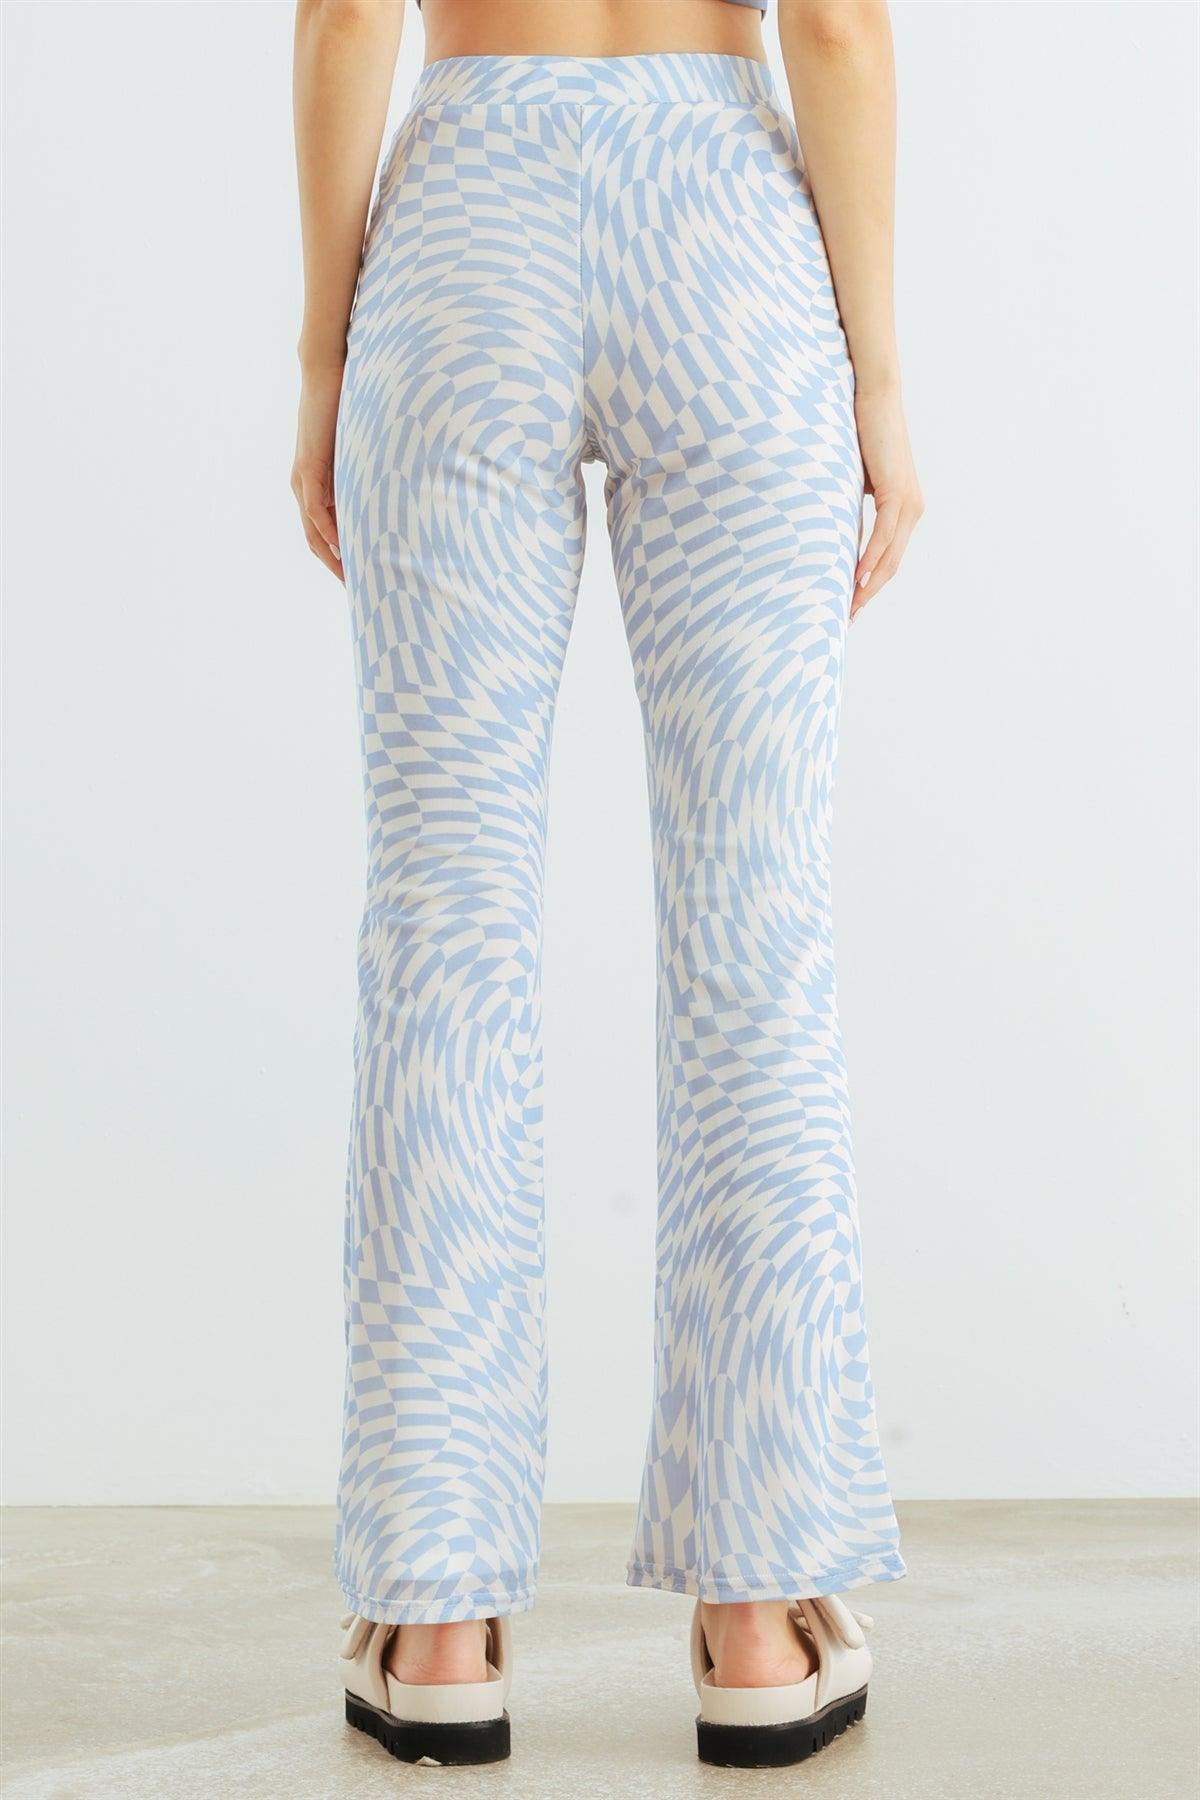 White & Blue Abstract Print Mesh High Waist Pants /1-2-2-1